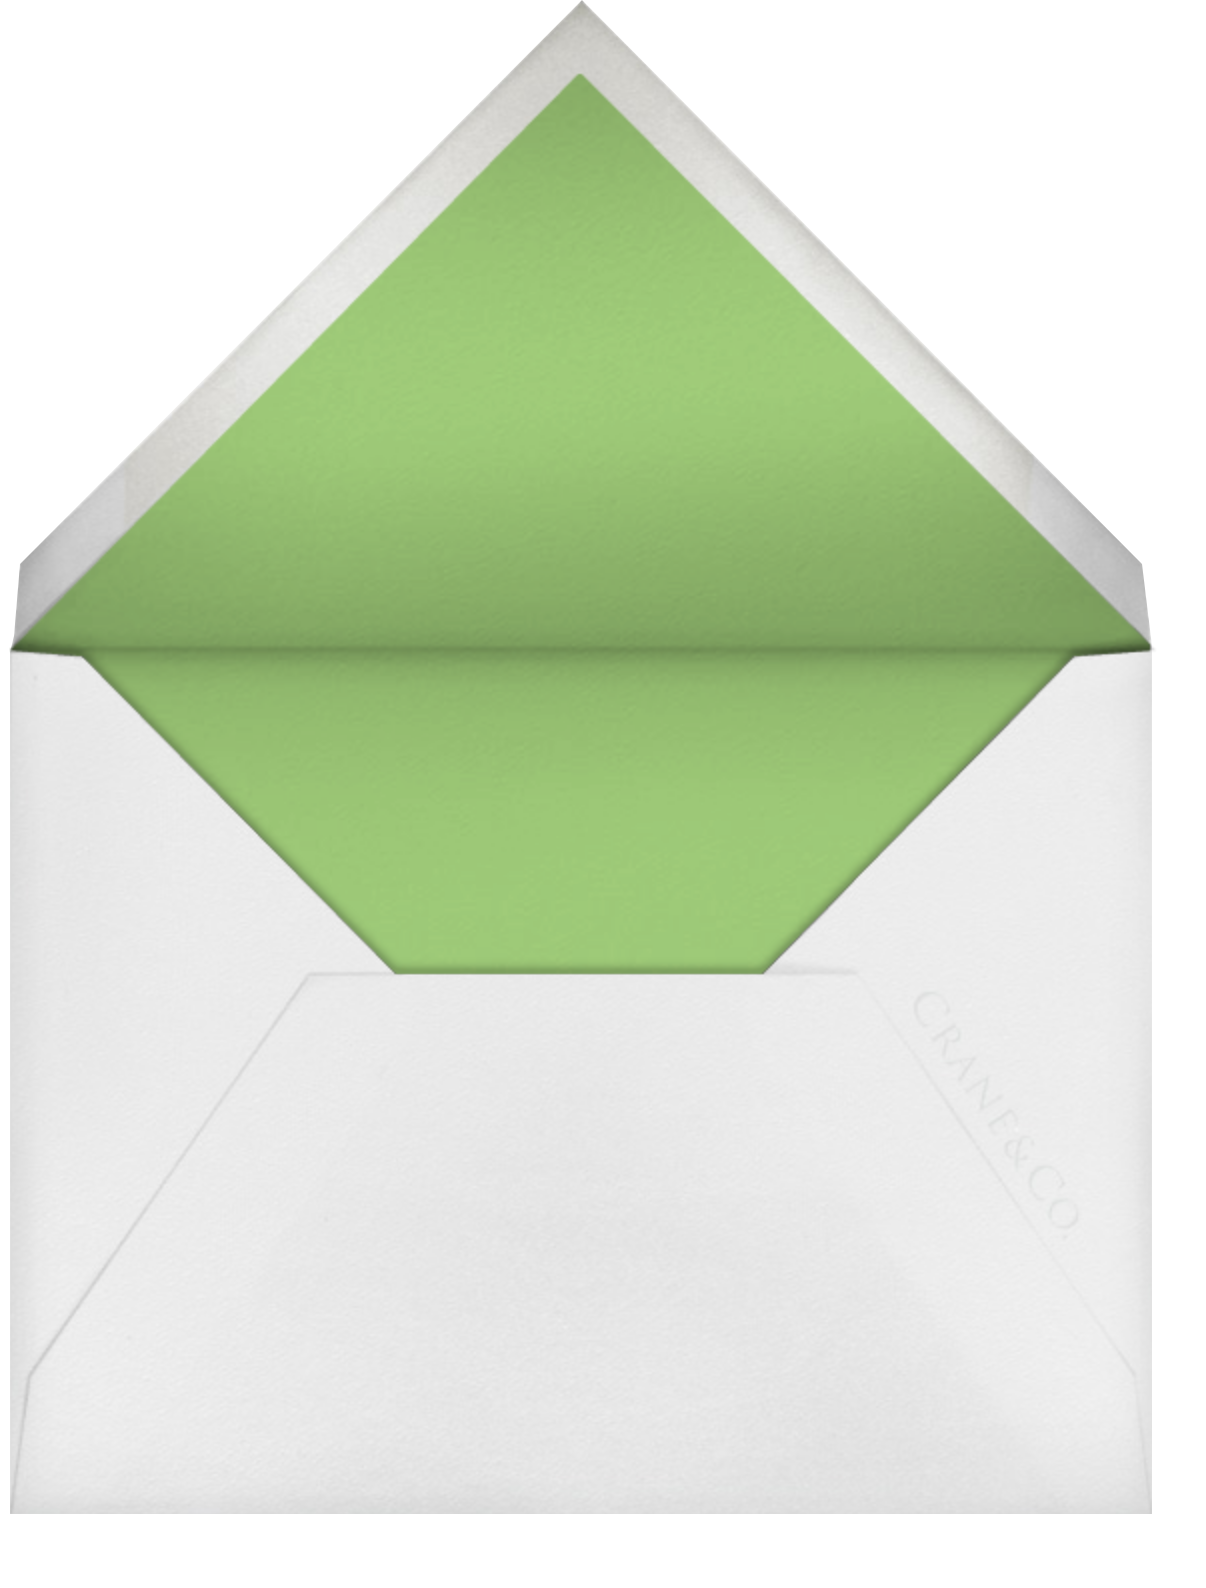 Erte (Thank You) - Spring Green and Charcoal Gray - Crane & Co. - Envelope